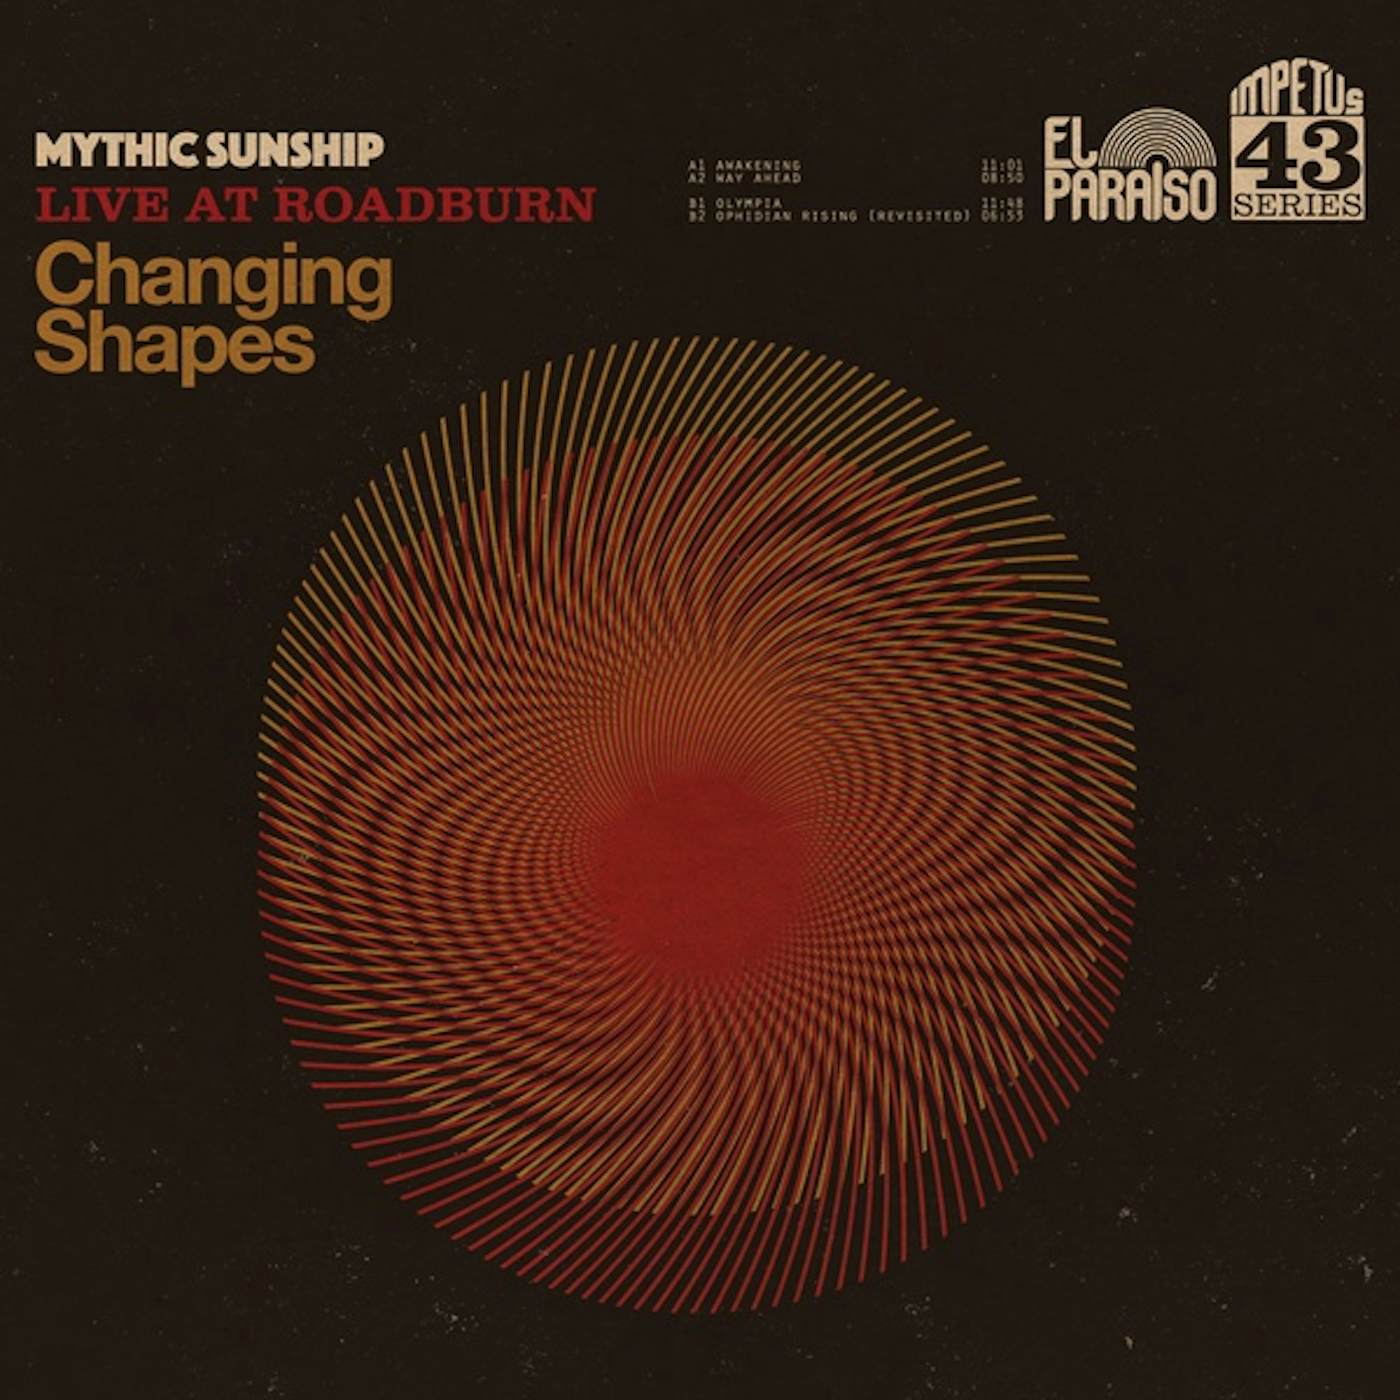 Mythic Sunship Changing shapes CD